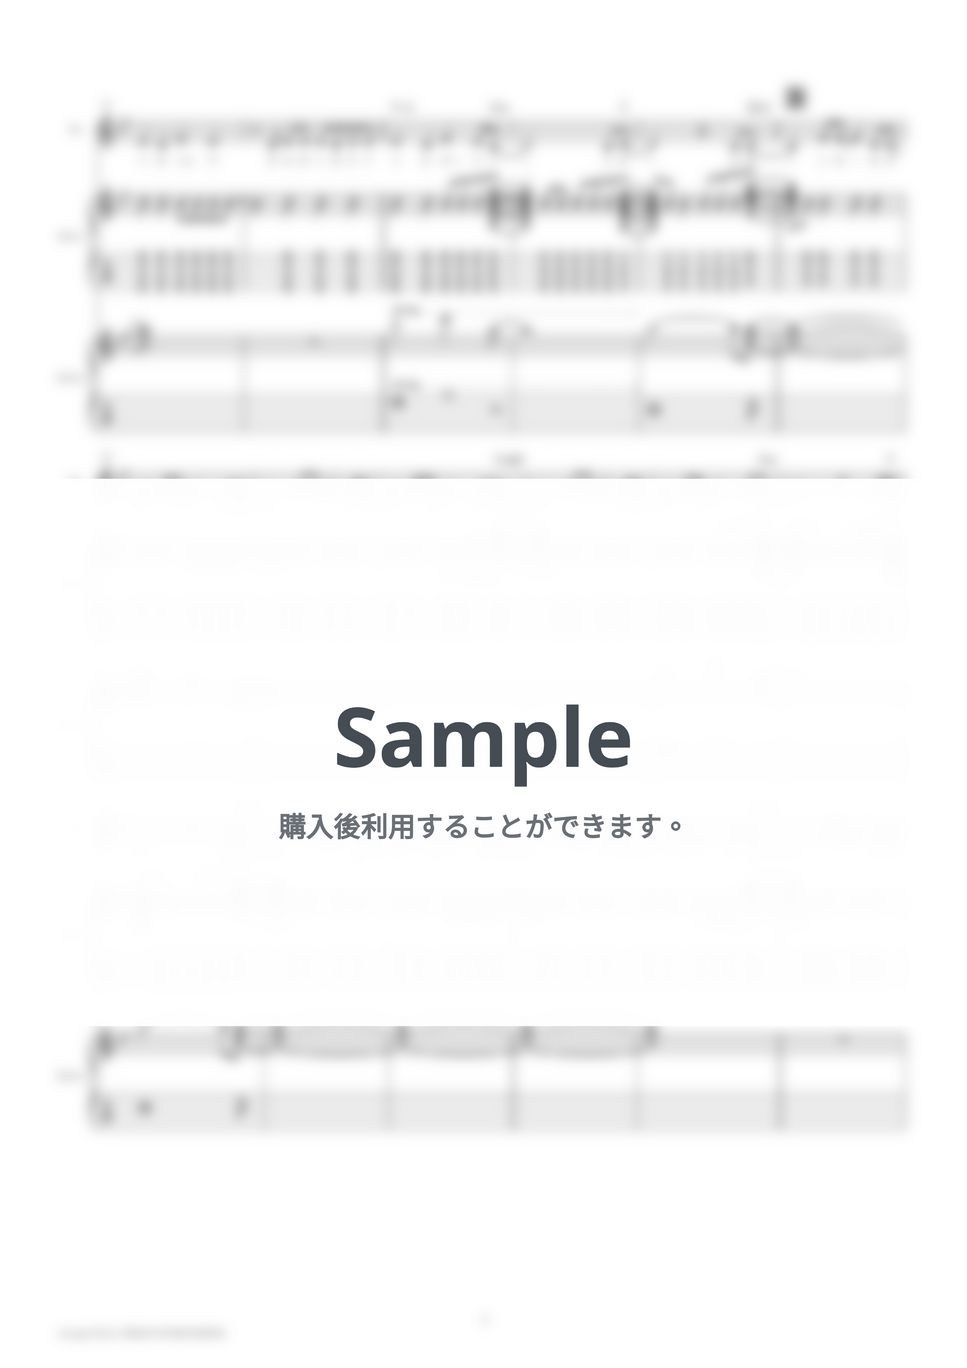 niki - 平面説 (ギタースコア・歌詞・コード付き) by TRIAD GUITAR SCHOOL